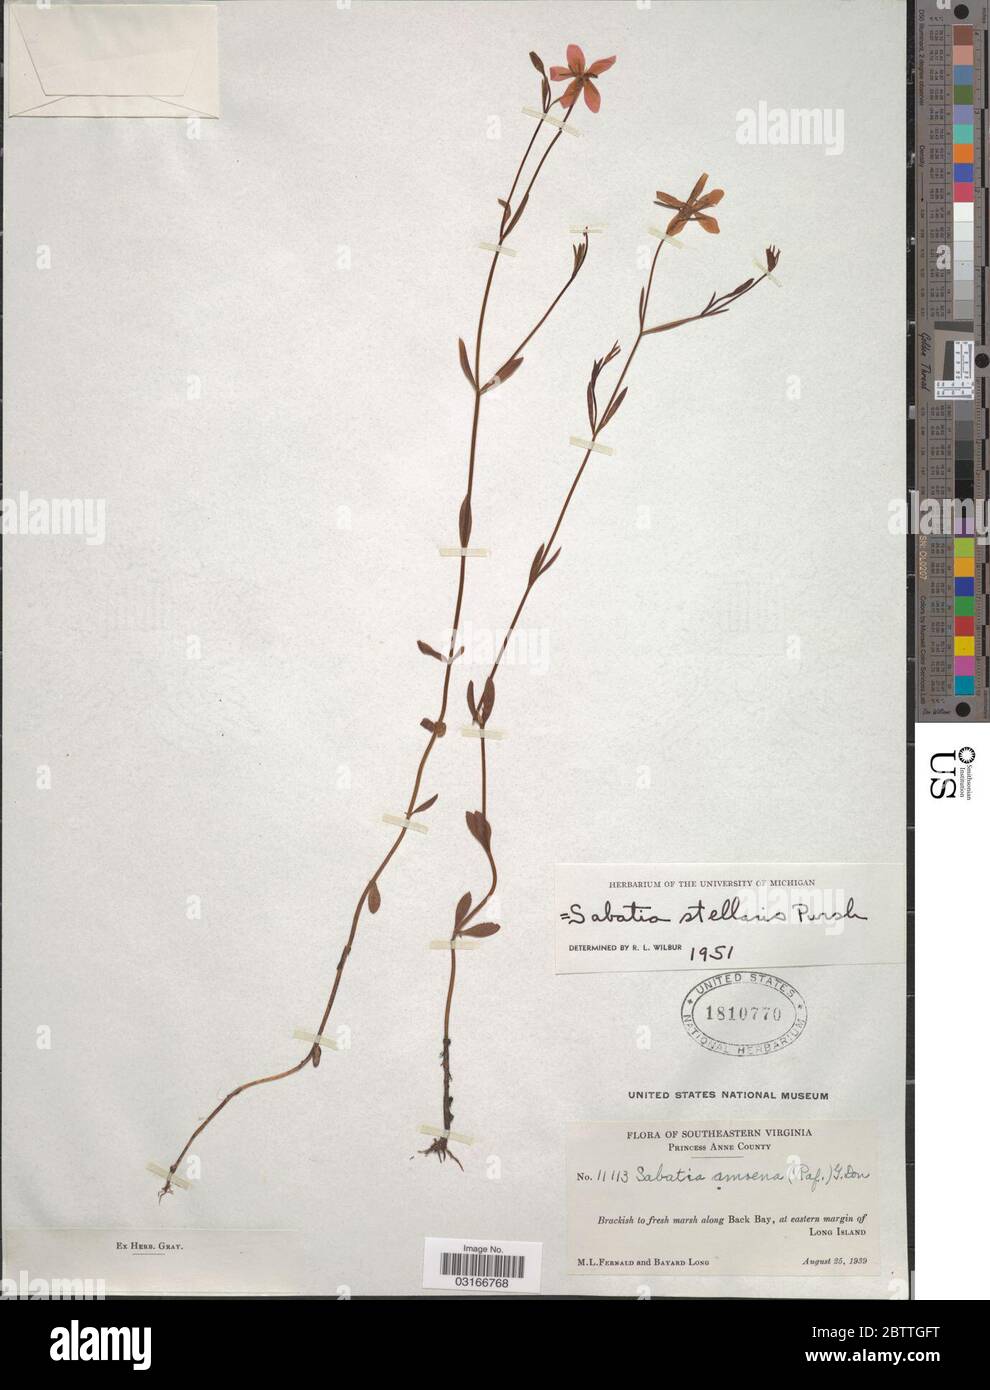 Sabatia stellaris Pursh. Stock Photo